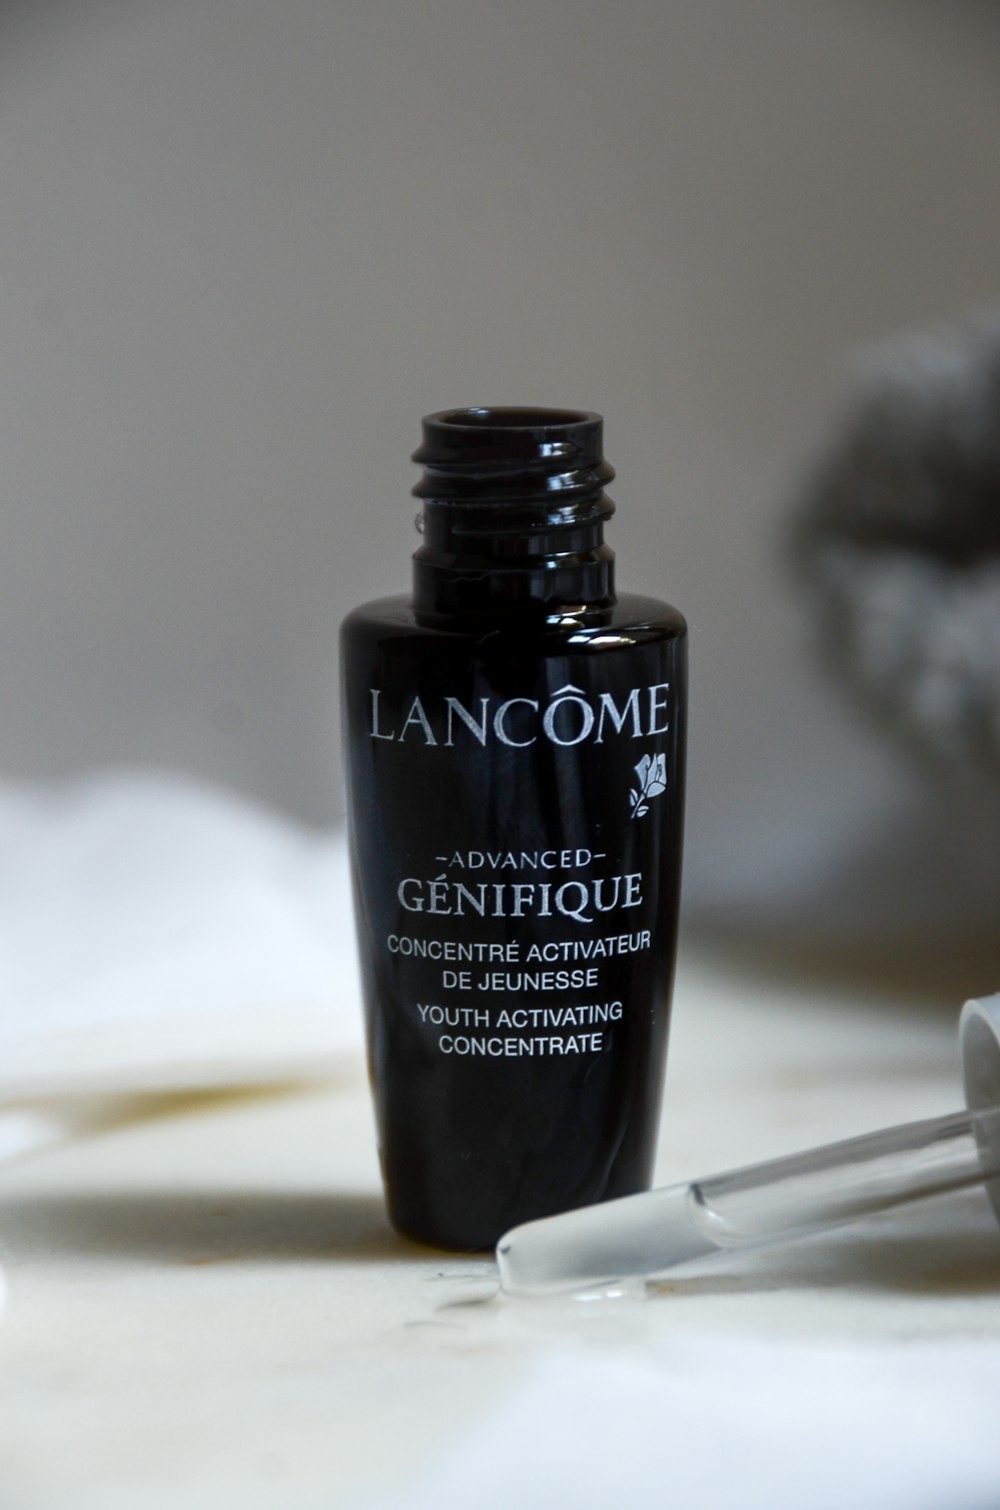 a bottle of lancome advanced genifique on a table